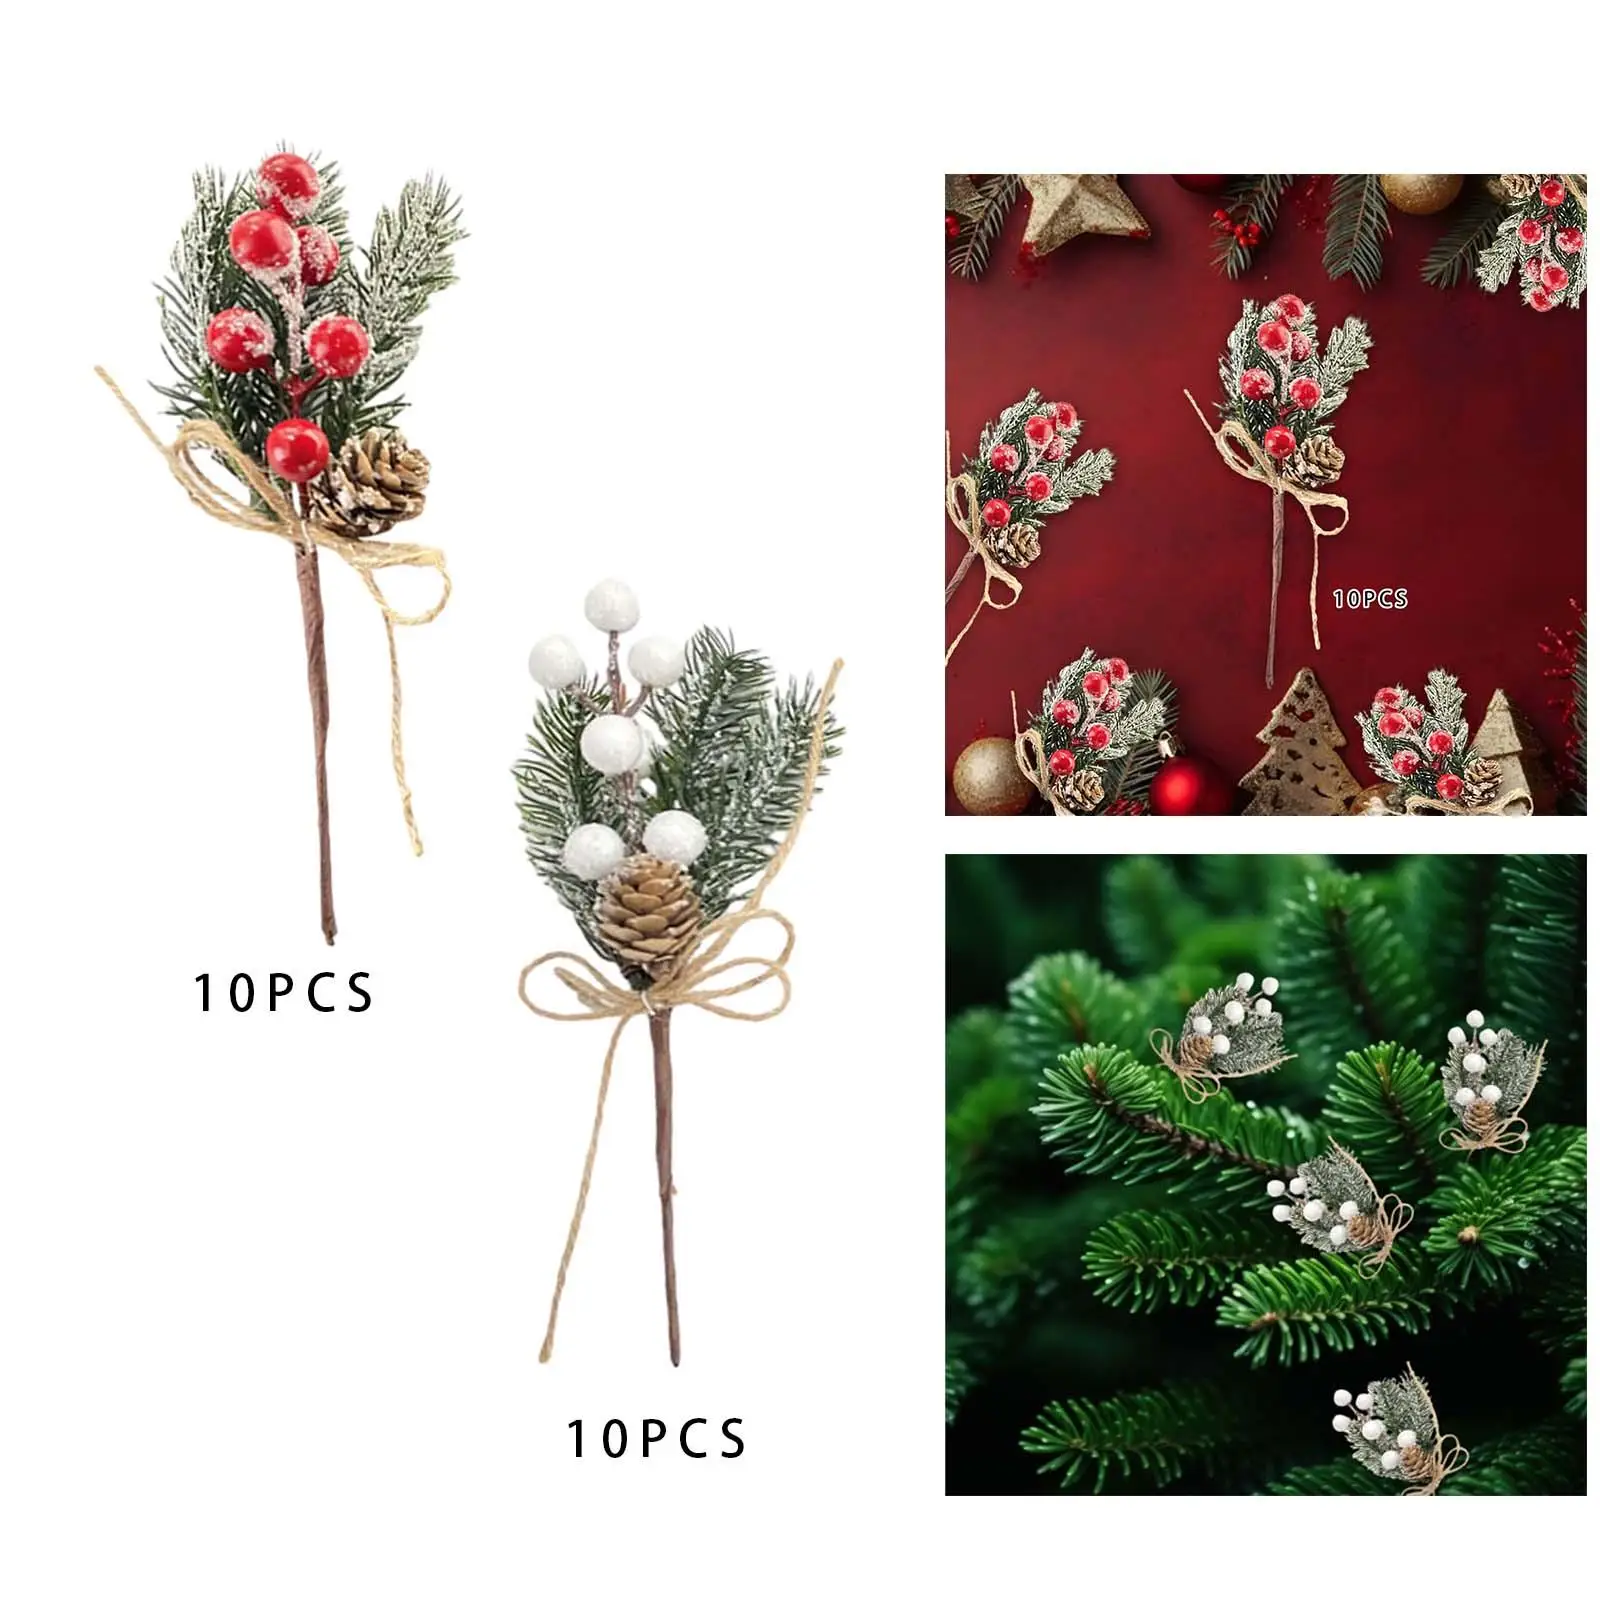 10 Pieces Artificial Christmas Picks Artificial Berry Stems for Crafts DIY Holiday Decor Garland Christmas Flower Arrangements